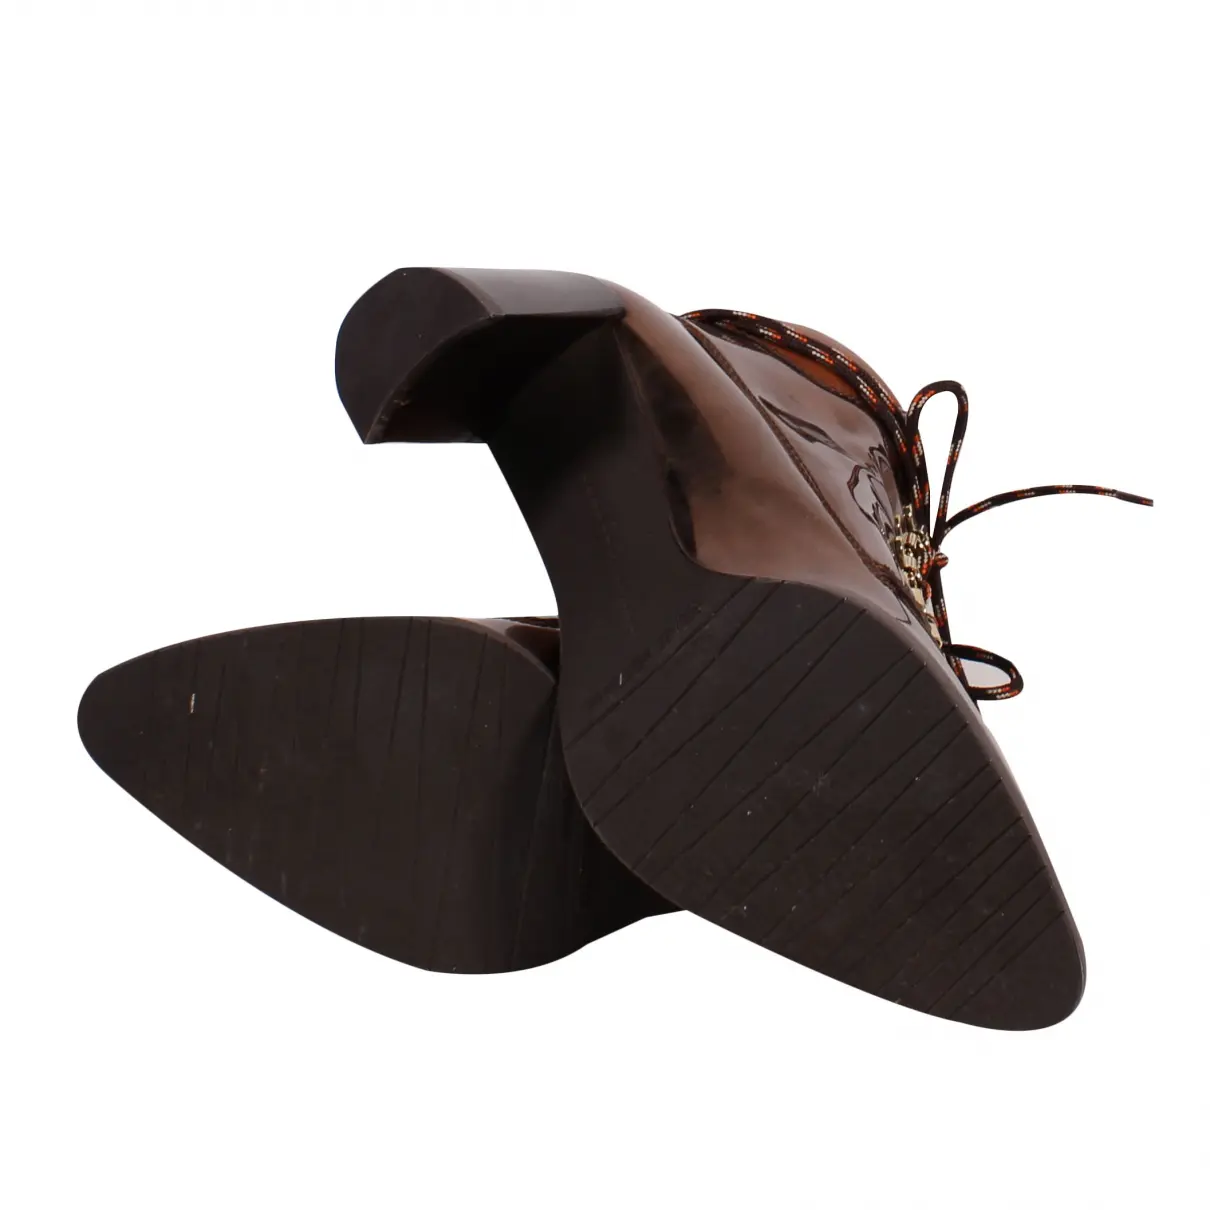 Patent leather heels Stuart Weitzman